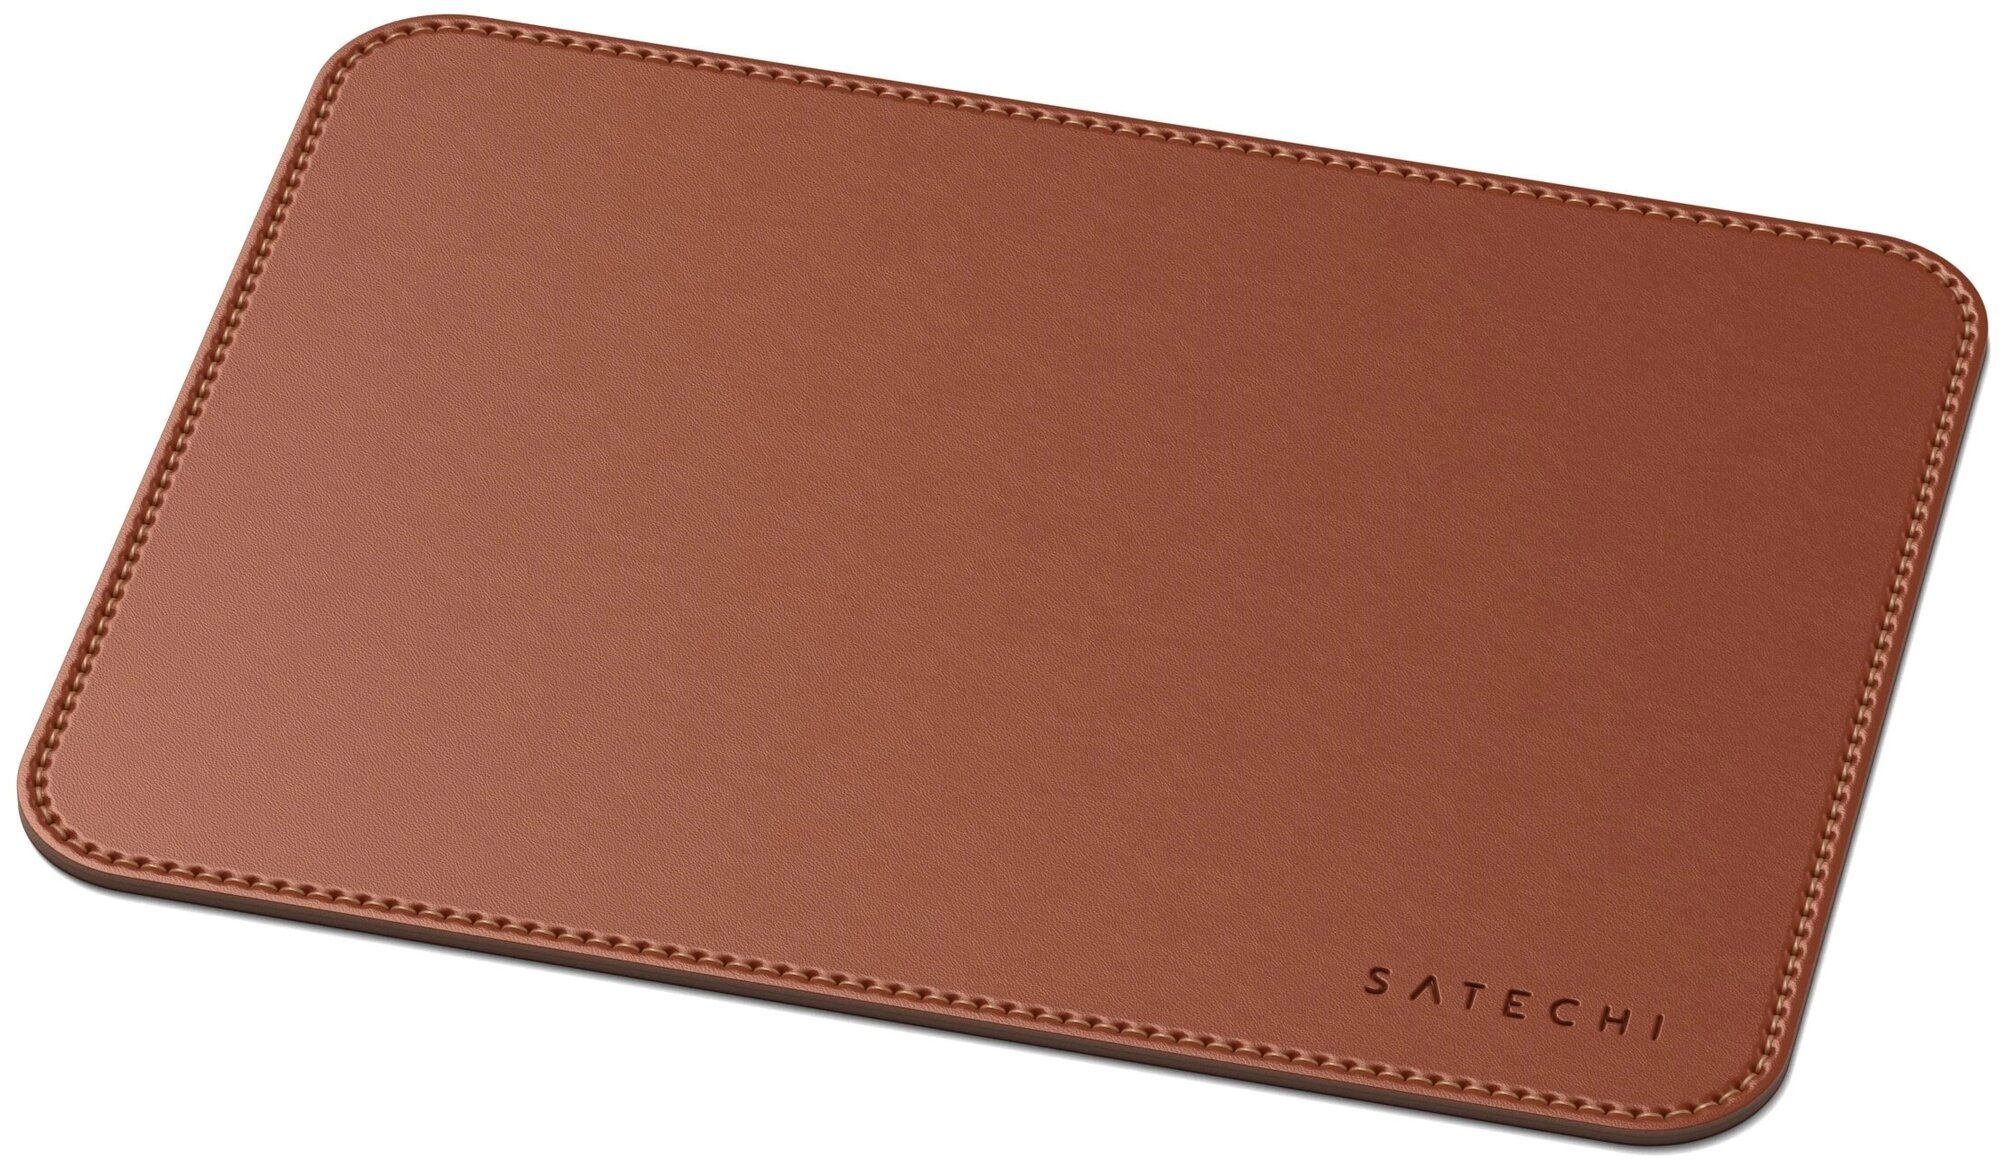 Коврик Satechi Eco Leather Mouse Pad Размер 25 x 19 см. коричневый ST-ELMPN - фото 1